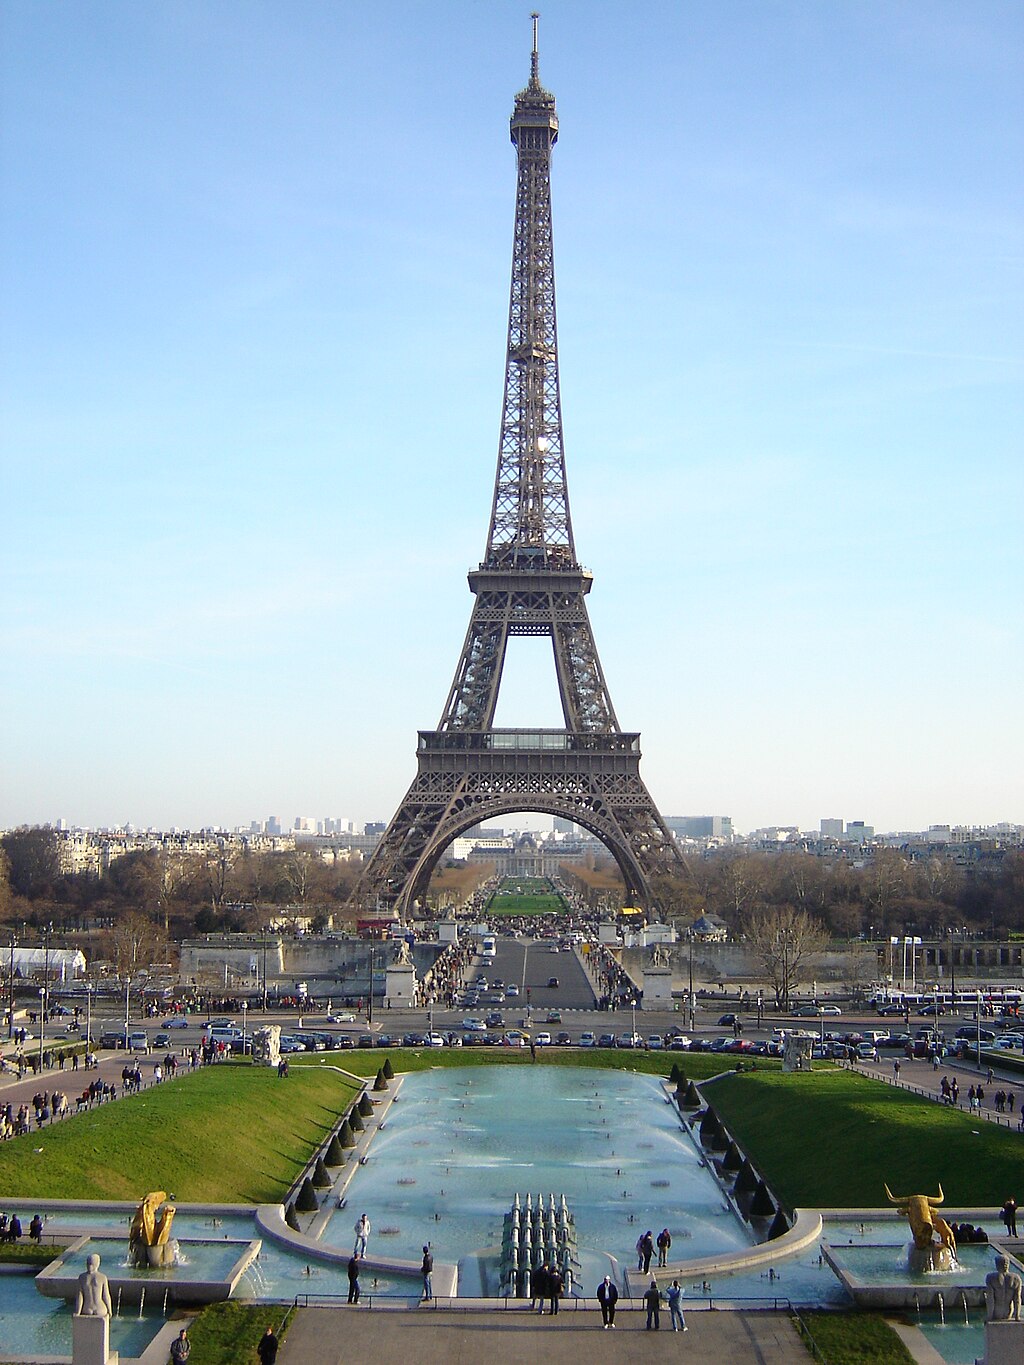 Eiffel Tower in Paris - France